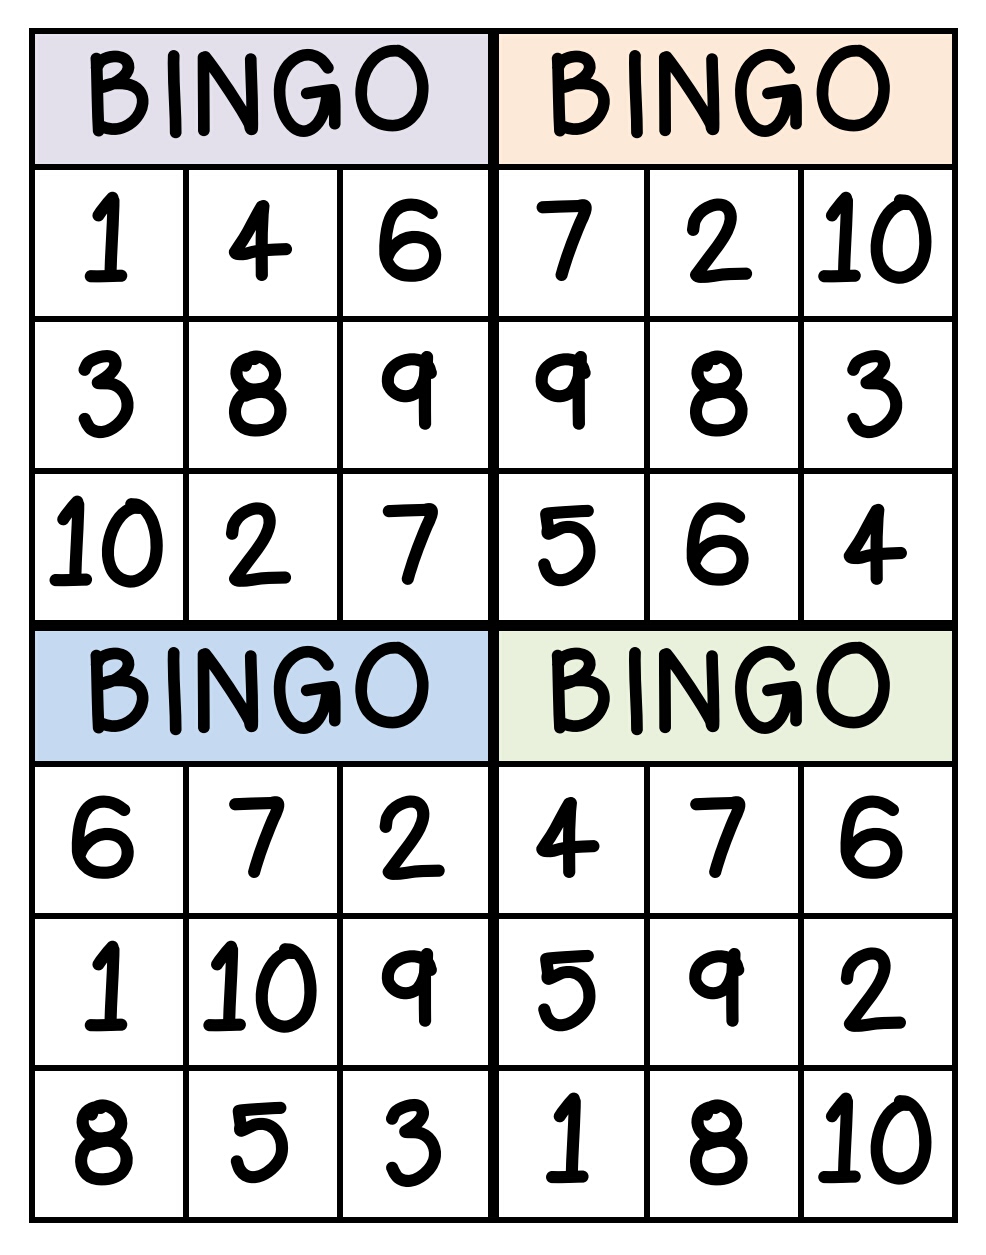 jogos de bingo pachinko